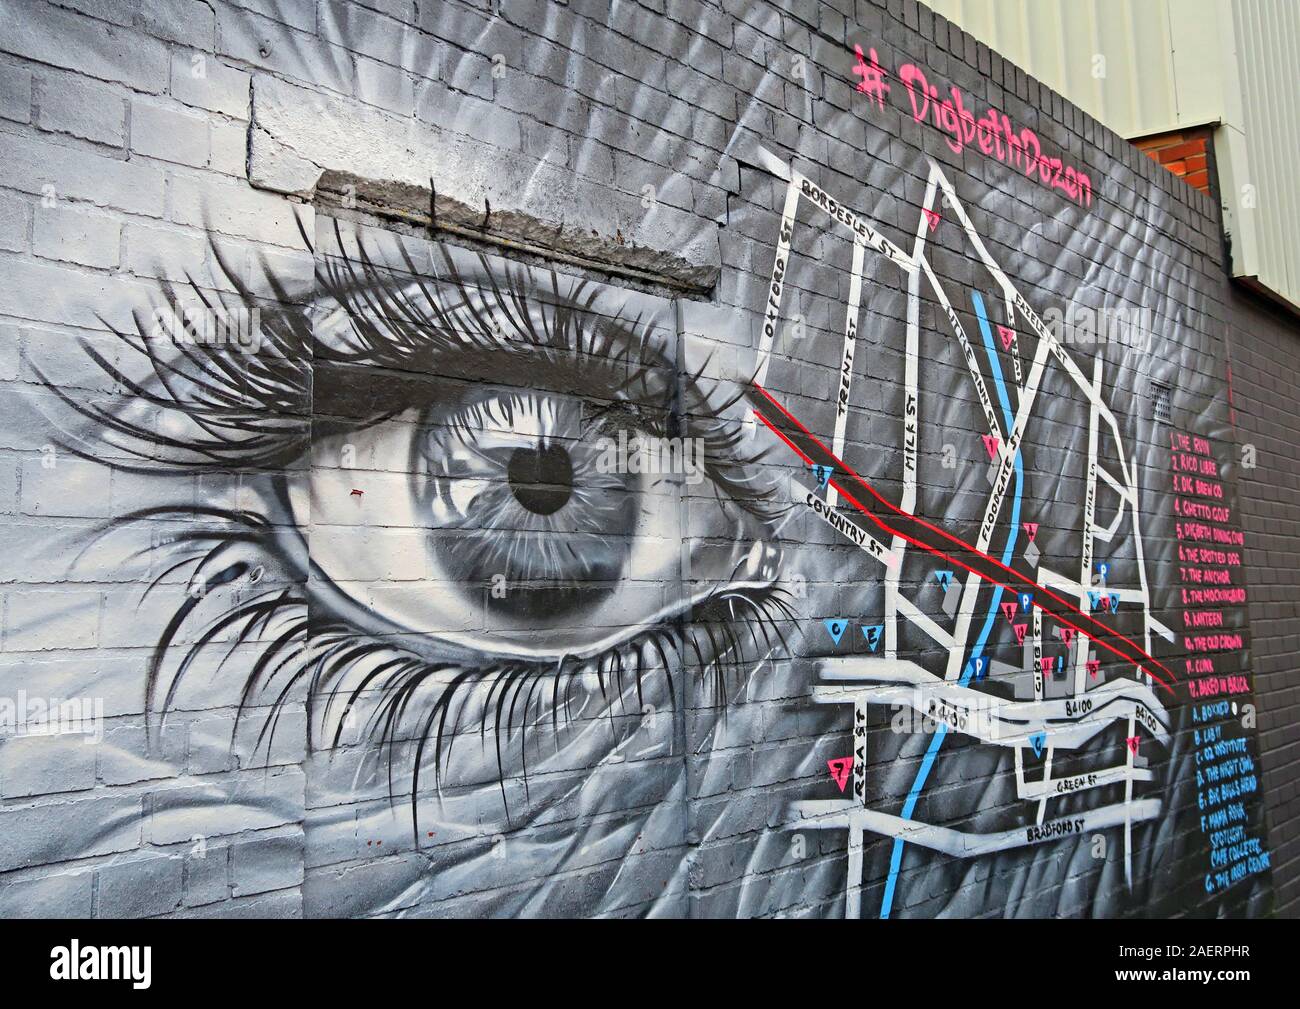 Digbeth Dozen, Deep Eye, Graffiti urbano arte callejero, en Floodgate St, Digbeth, Bordesley y Highgate, Birmingham, West Midlands,Inglaterra,Reino Unido,B5 5ST Foto de stock